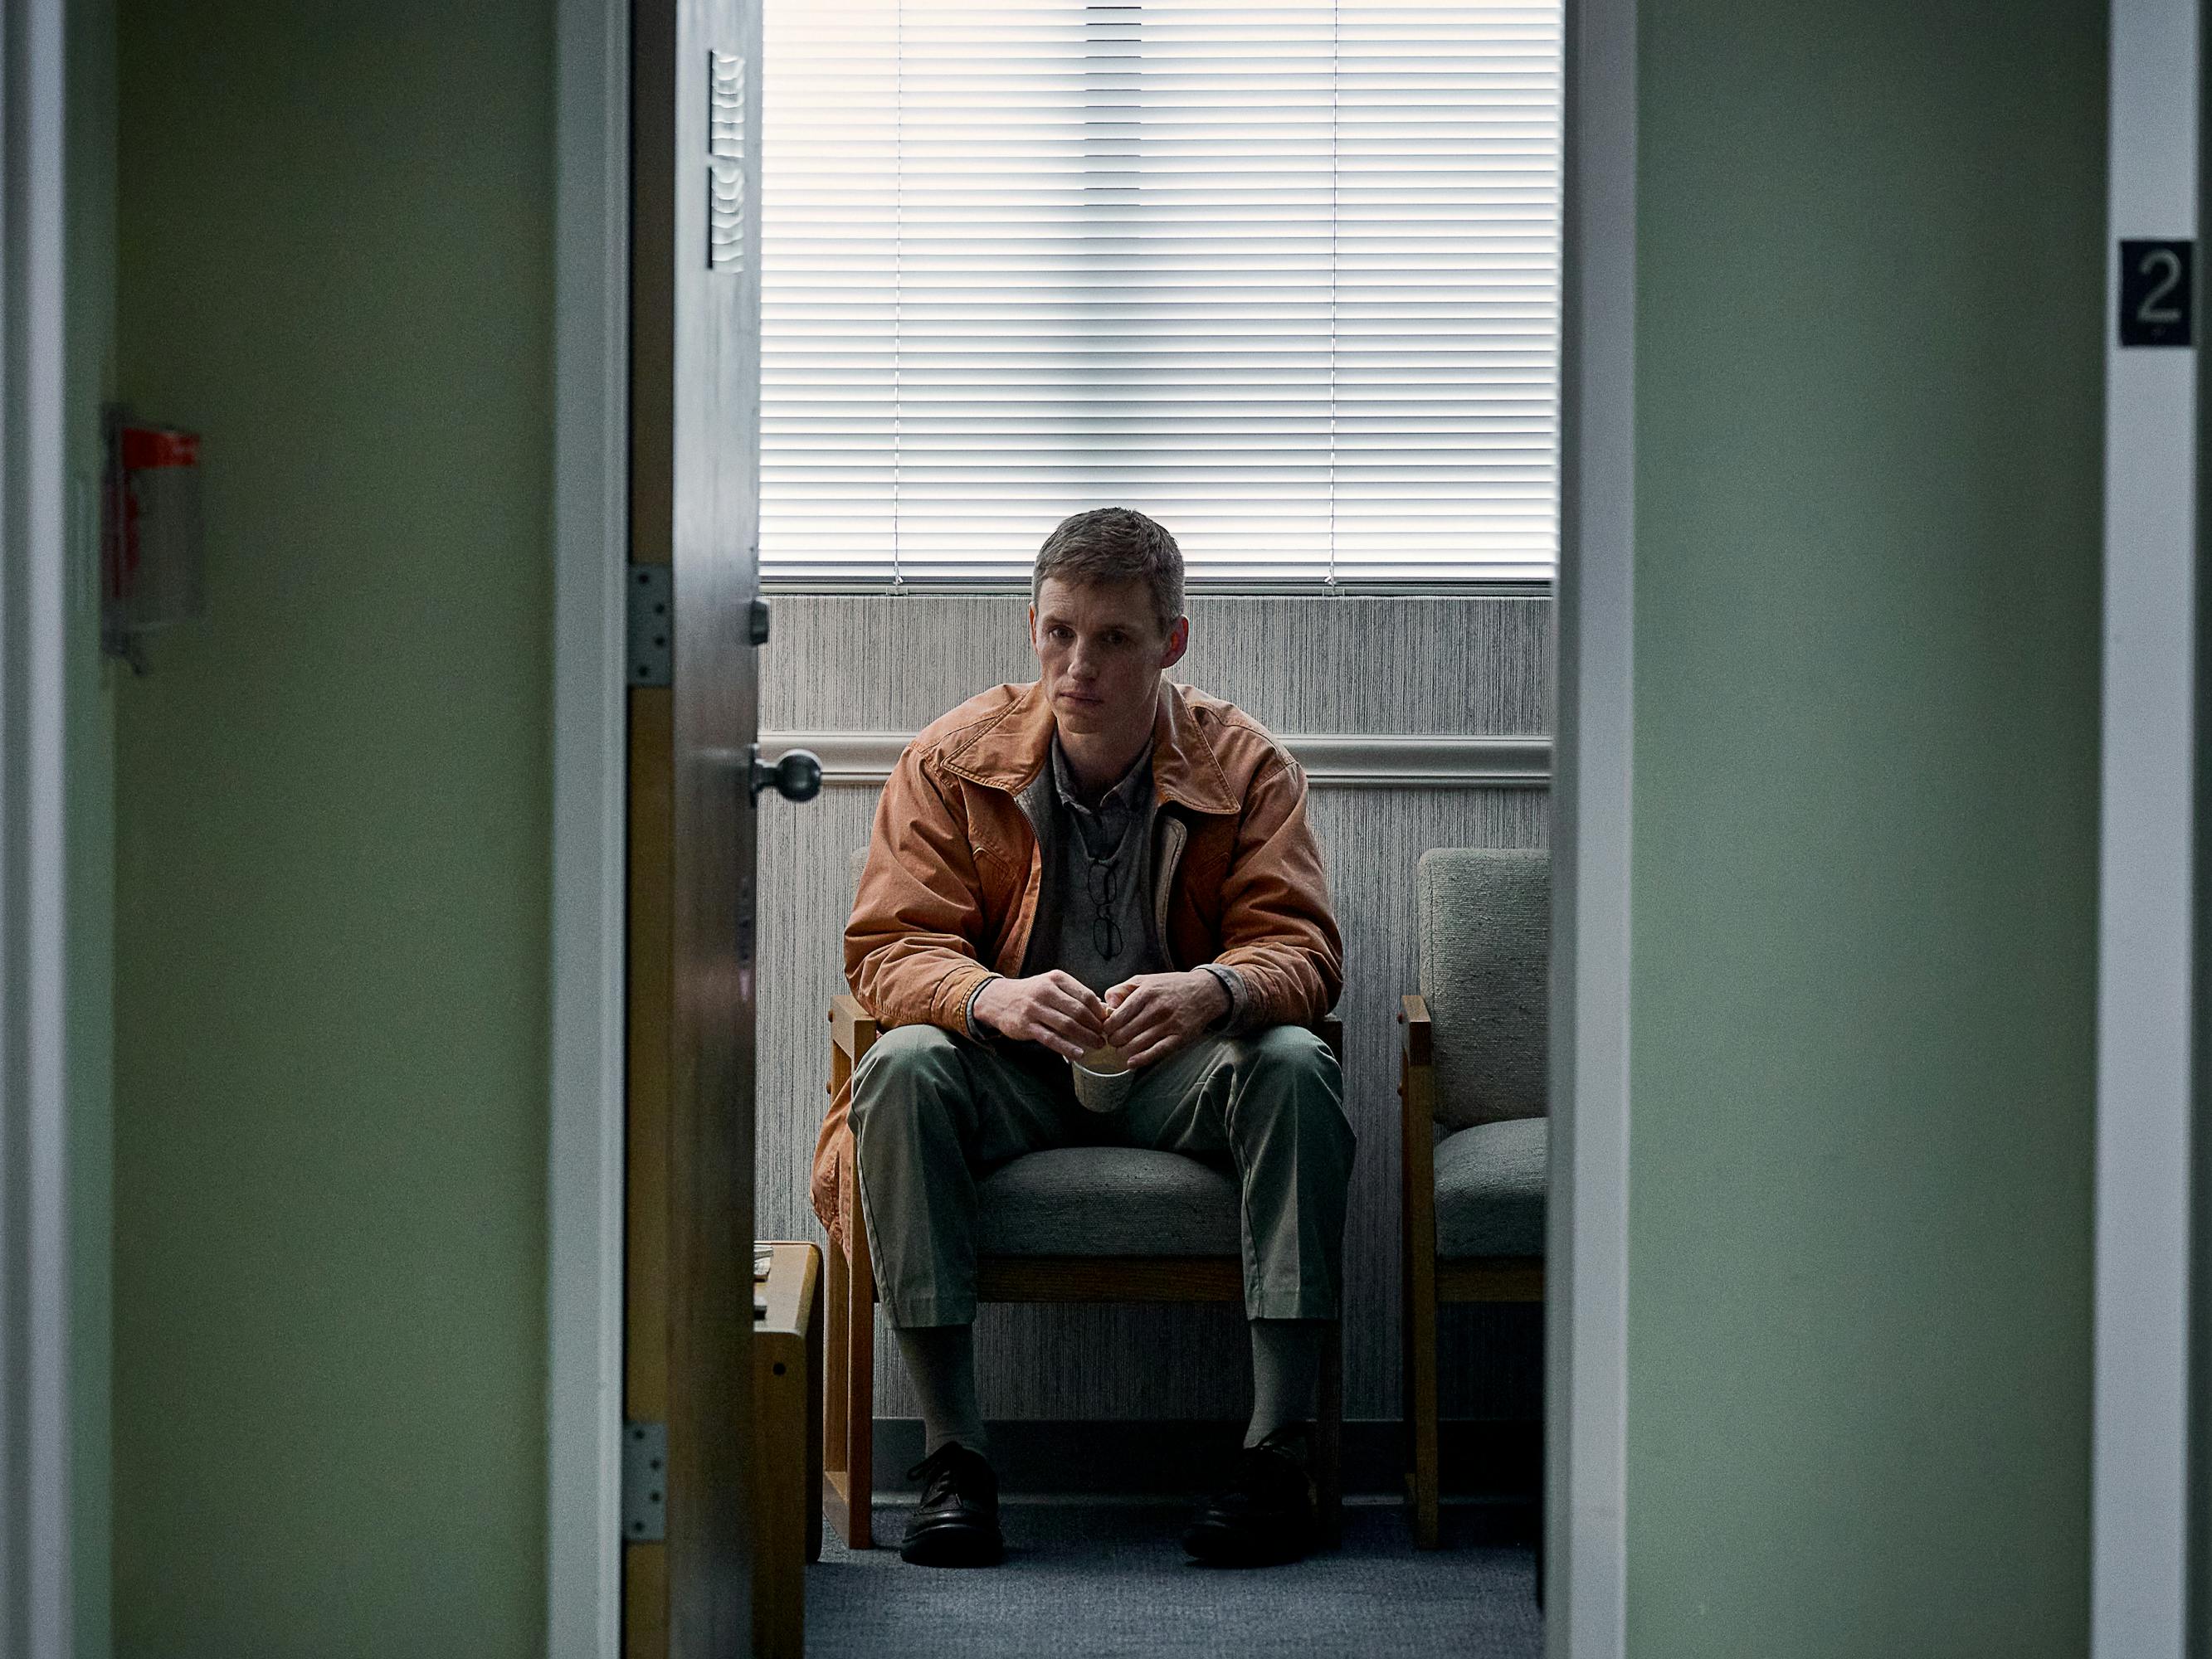 Charles Cullen (Eddie Redmayne) wears an orange coat, green pants, and sits in a waiting room.